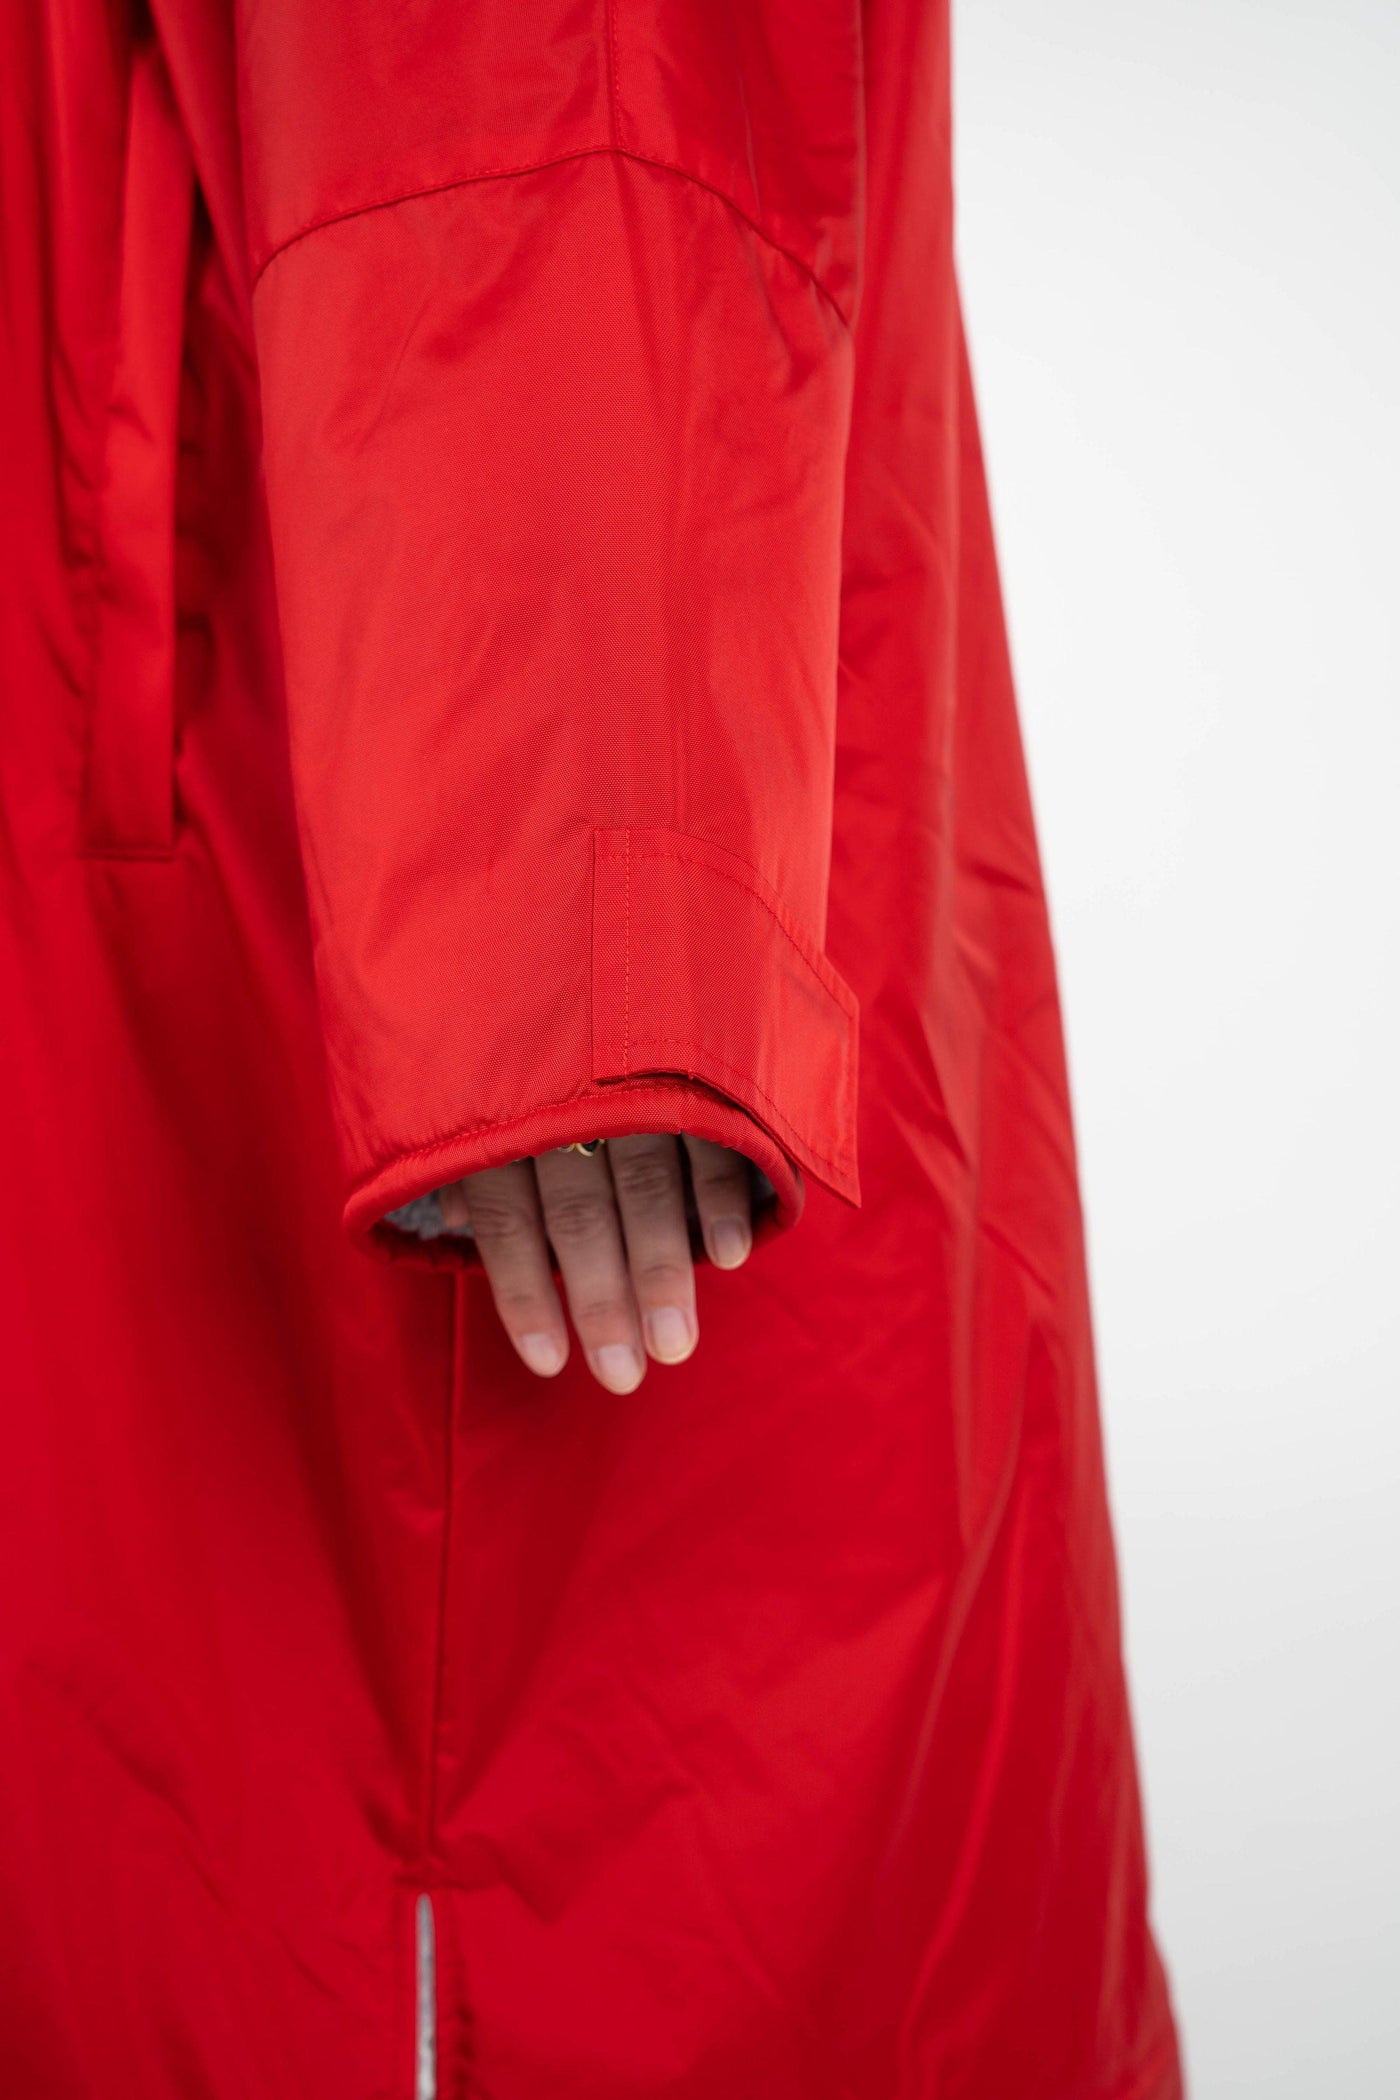 Waterproof Outdoor Changing Robe - RED